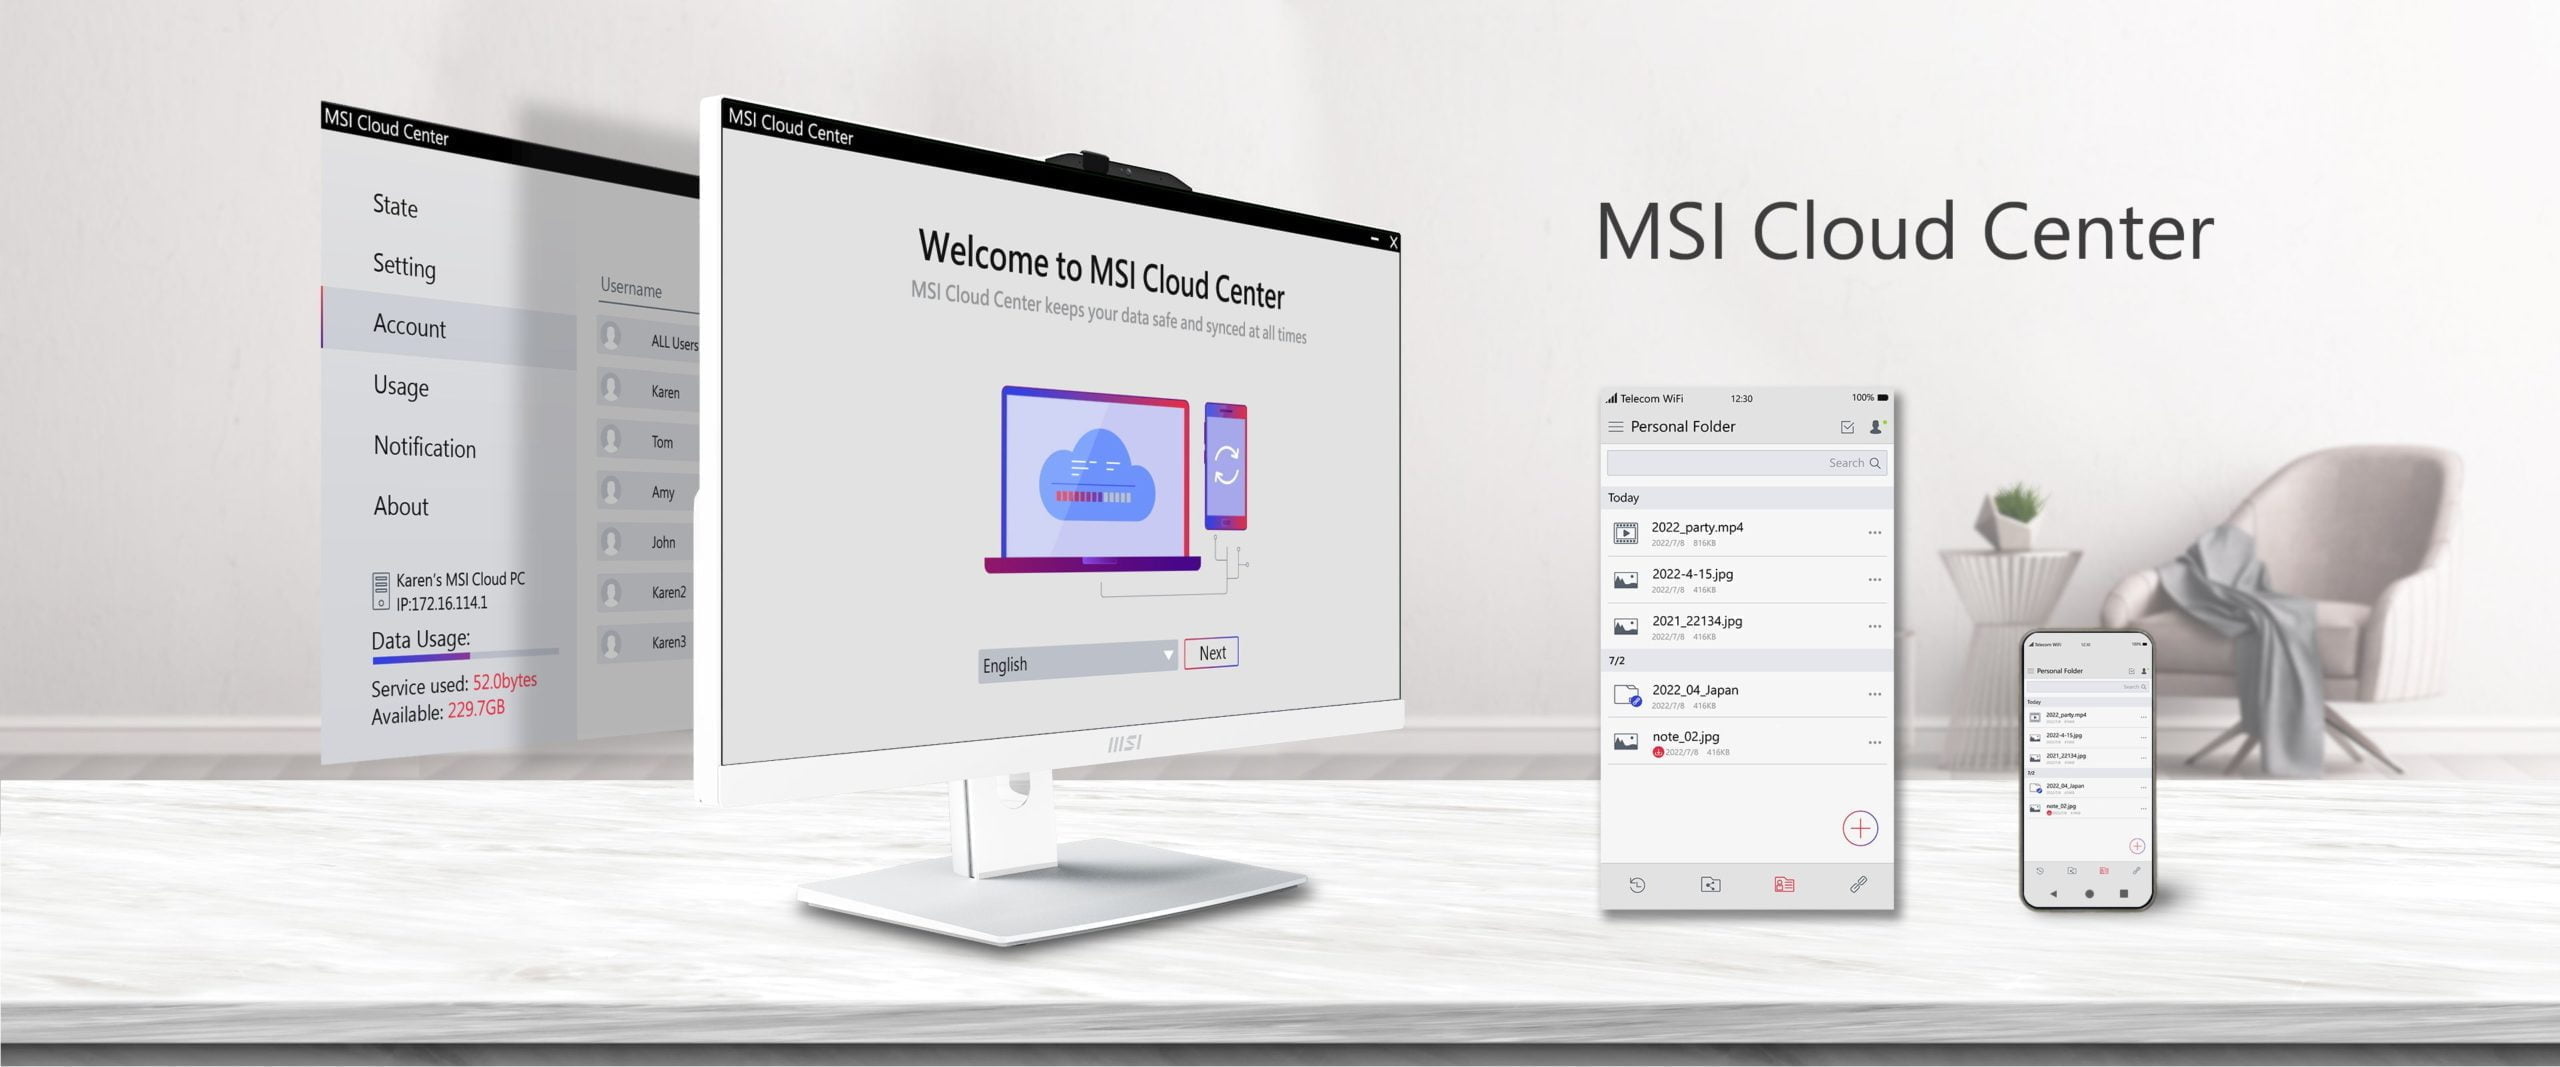 MSI Cloud Center for COMPUTEX scaled MMOSITE - Thông tin công nghệ, review, thủ thuật PC, gaming